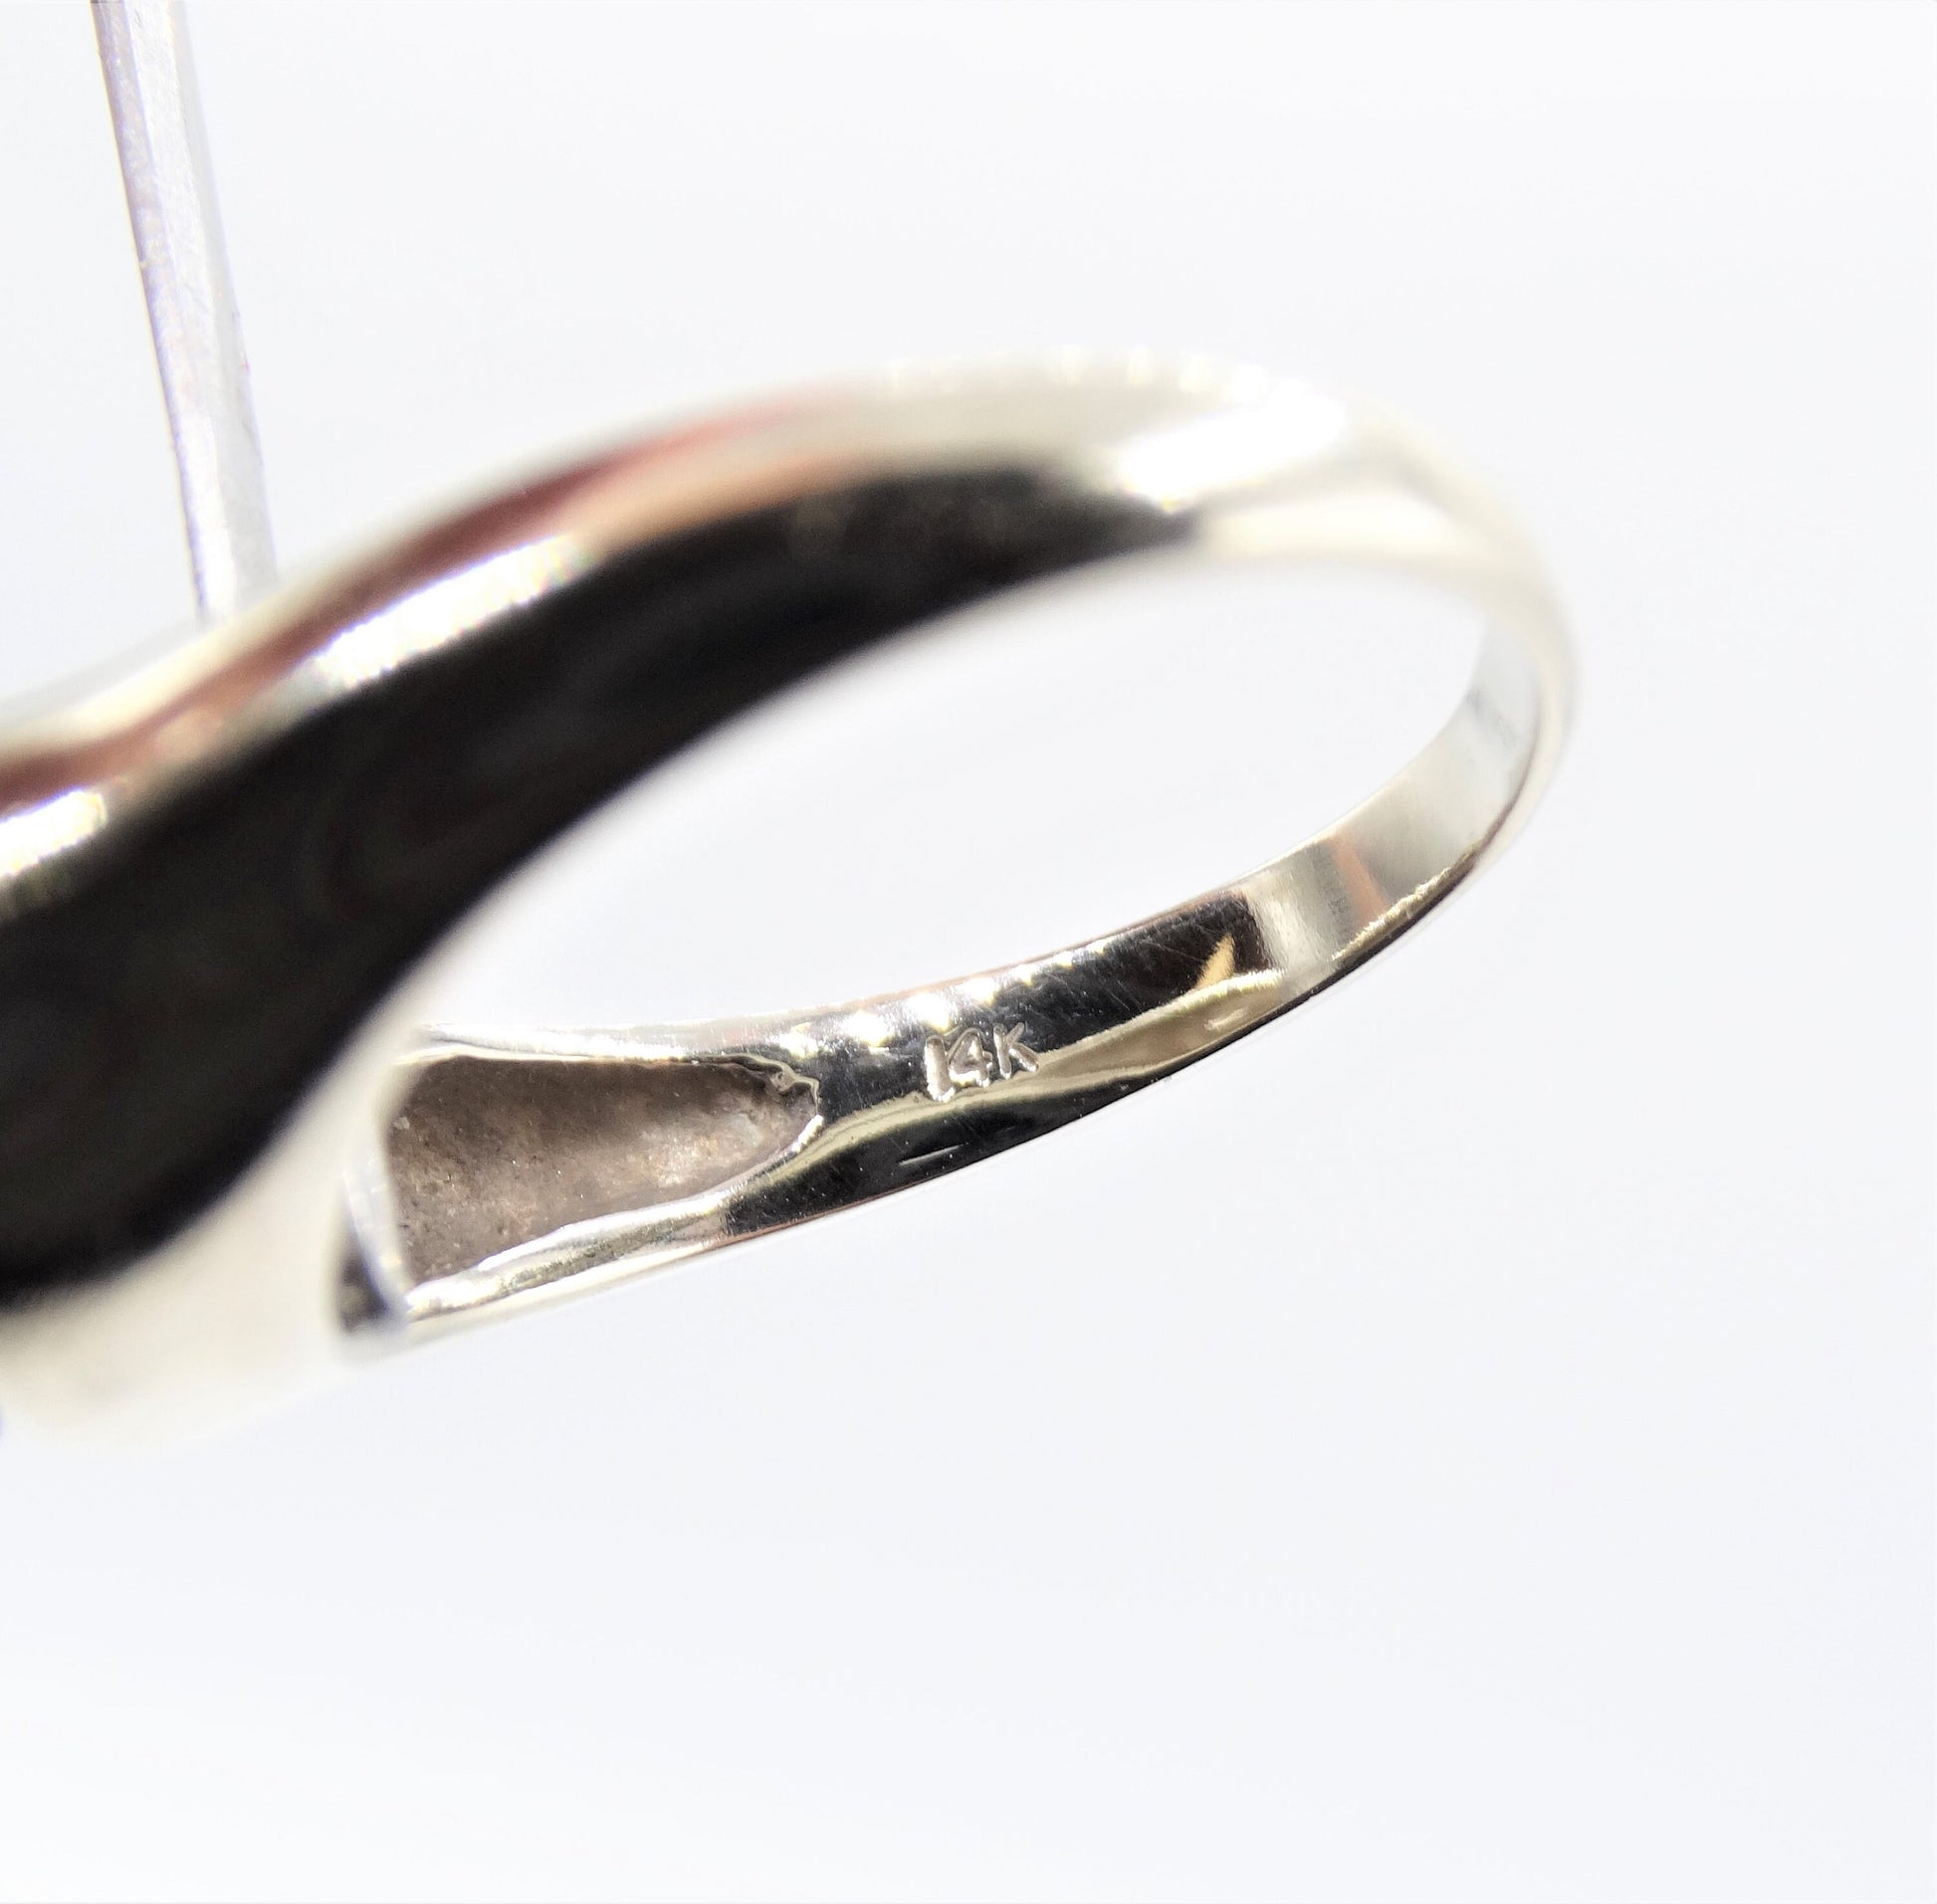 Estate Pearl 14K White Gold Modern Twist Ring 6.65mm Pearl, Ring Size 6 1/2, Fine Jewelry, Everyday Minimalist Jewelry